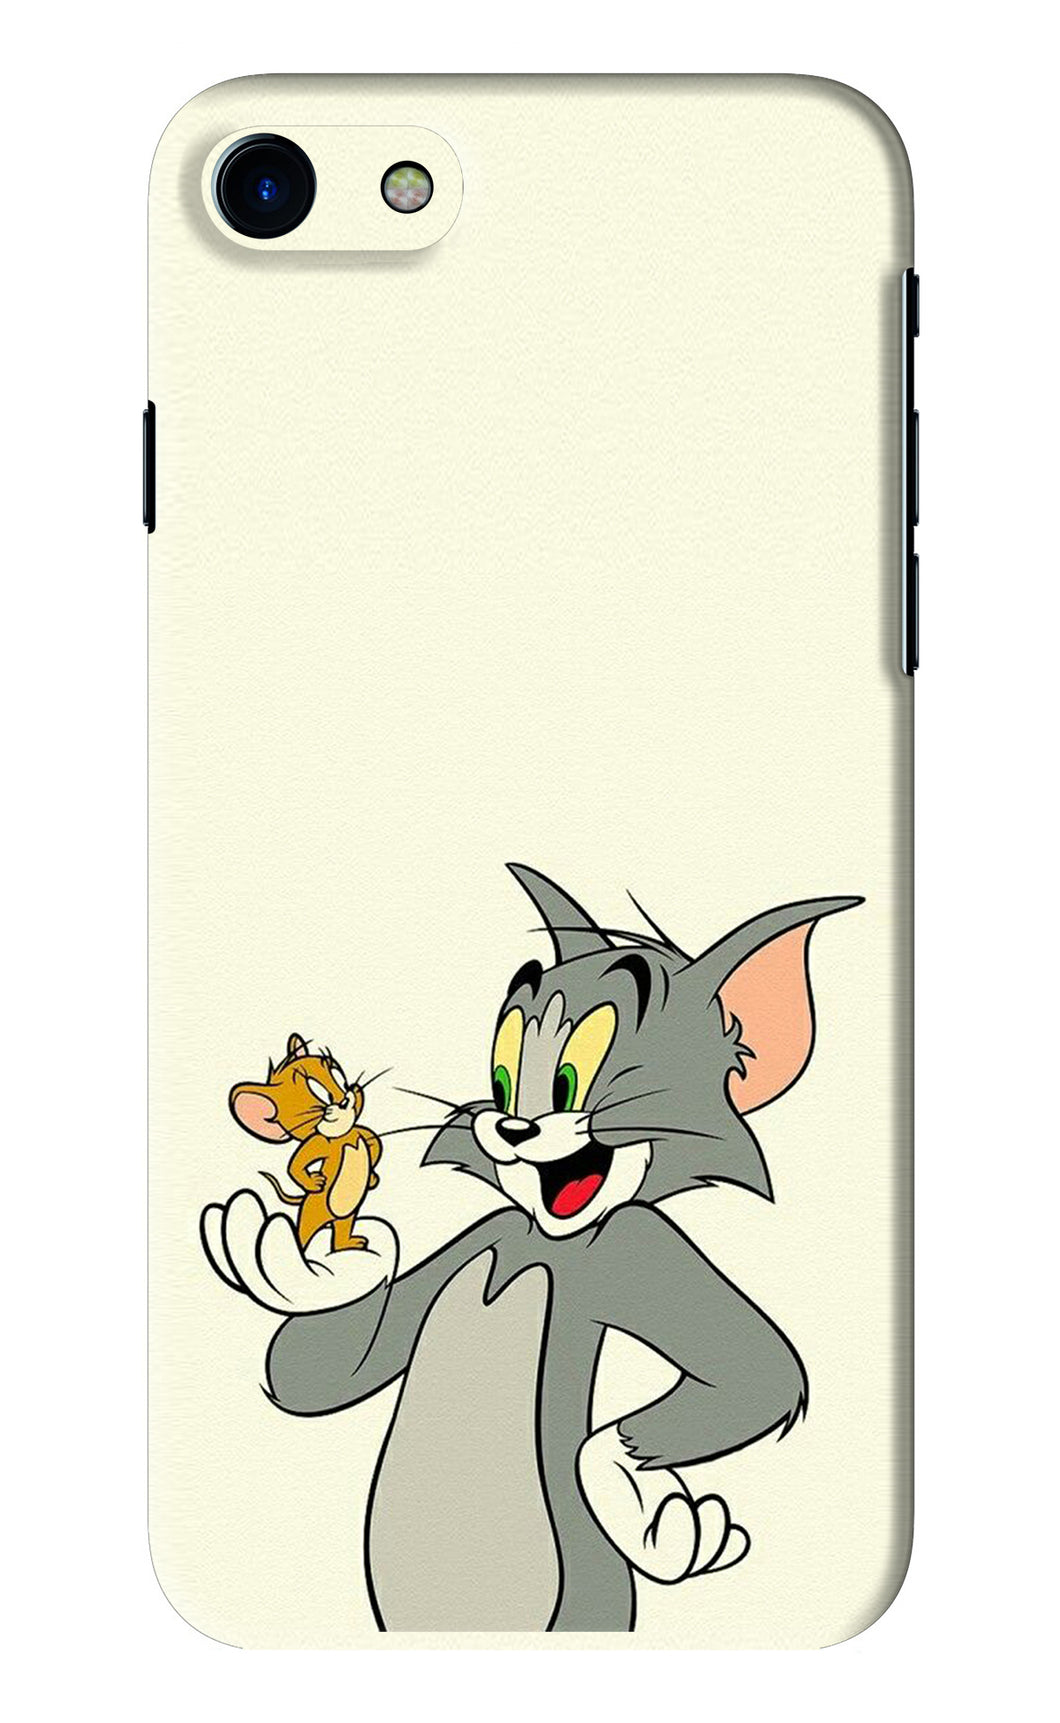 Tom & Jerry iPhone 7 Back Skin Wrap